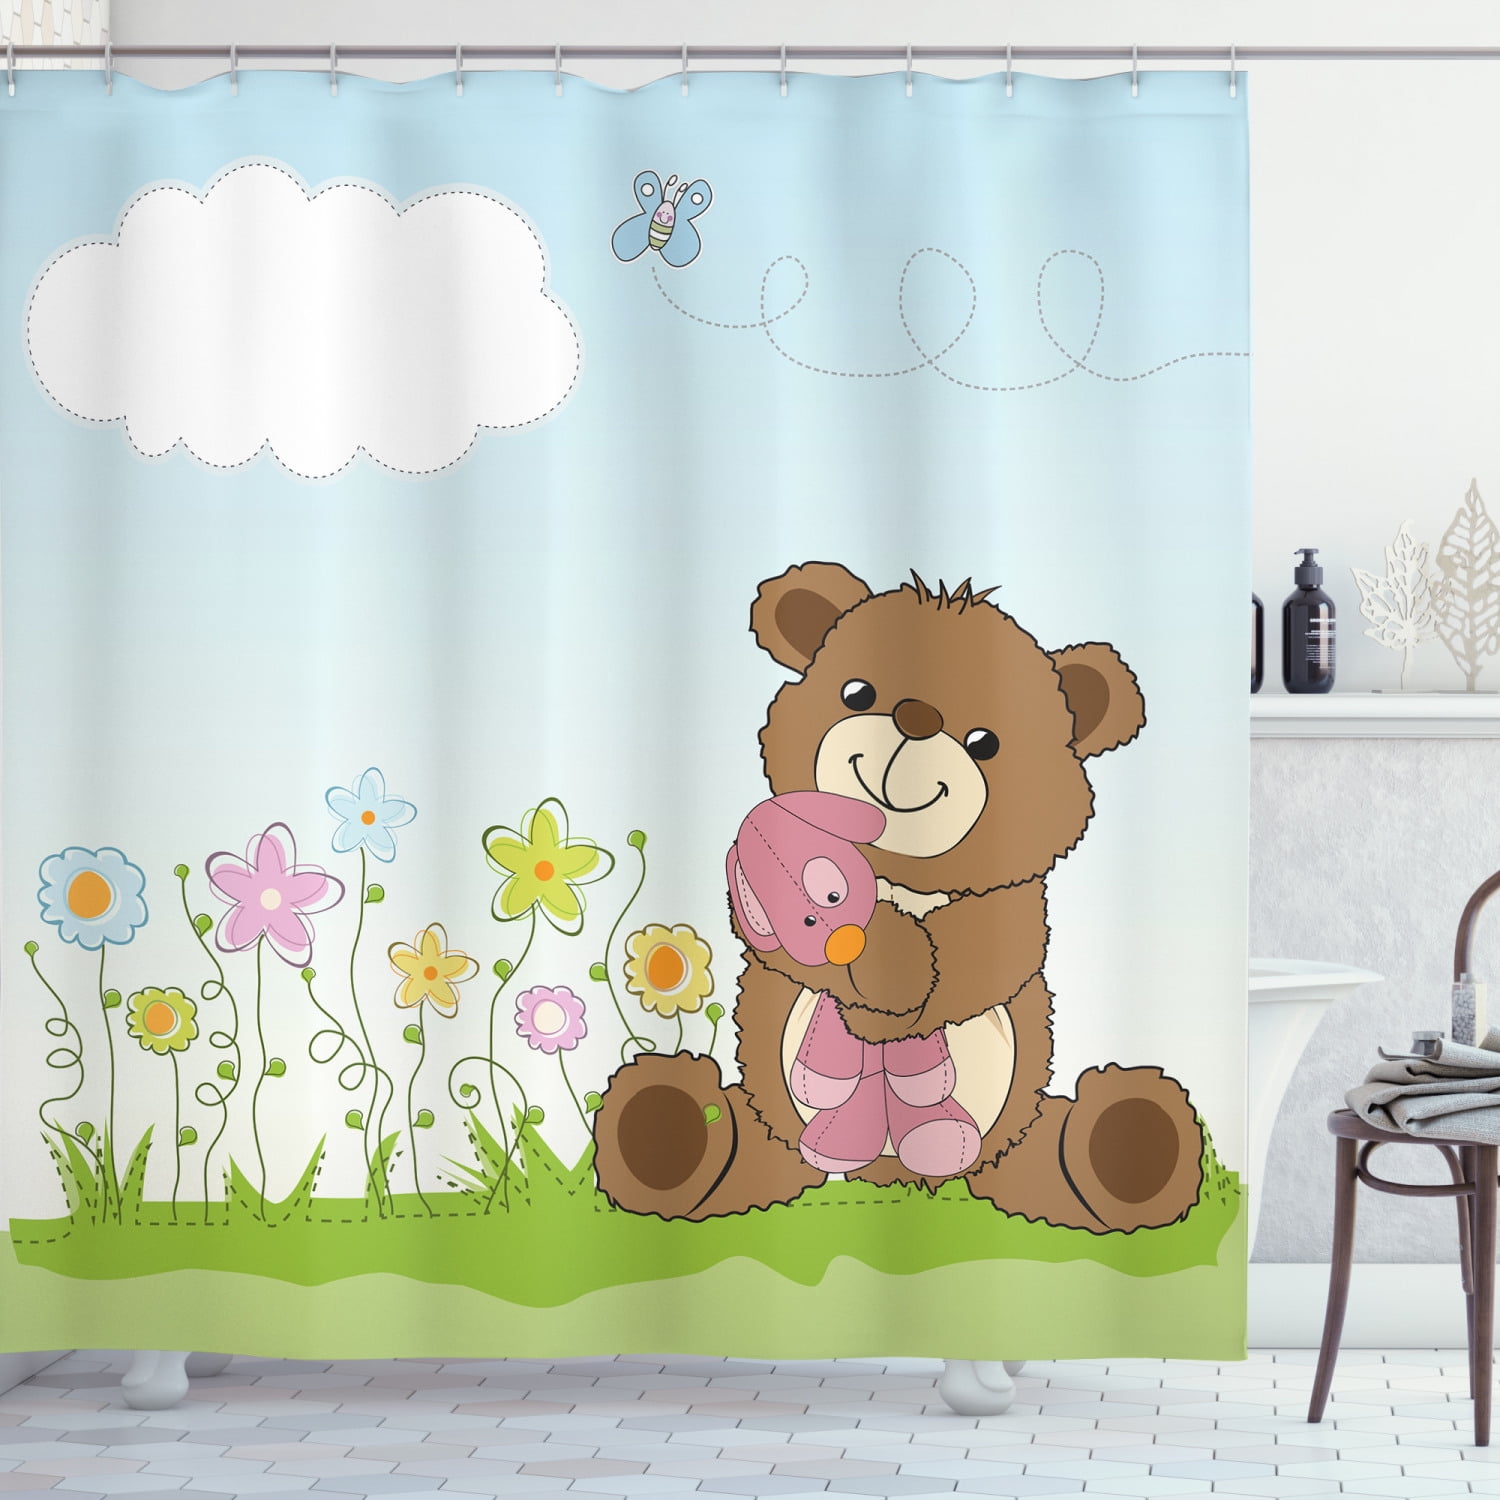 Kids Shower Curtain Retro Cartoon Teddy Bear Bathroom Accessories Decor Sets 